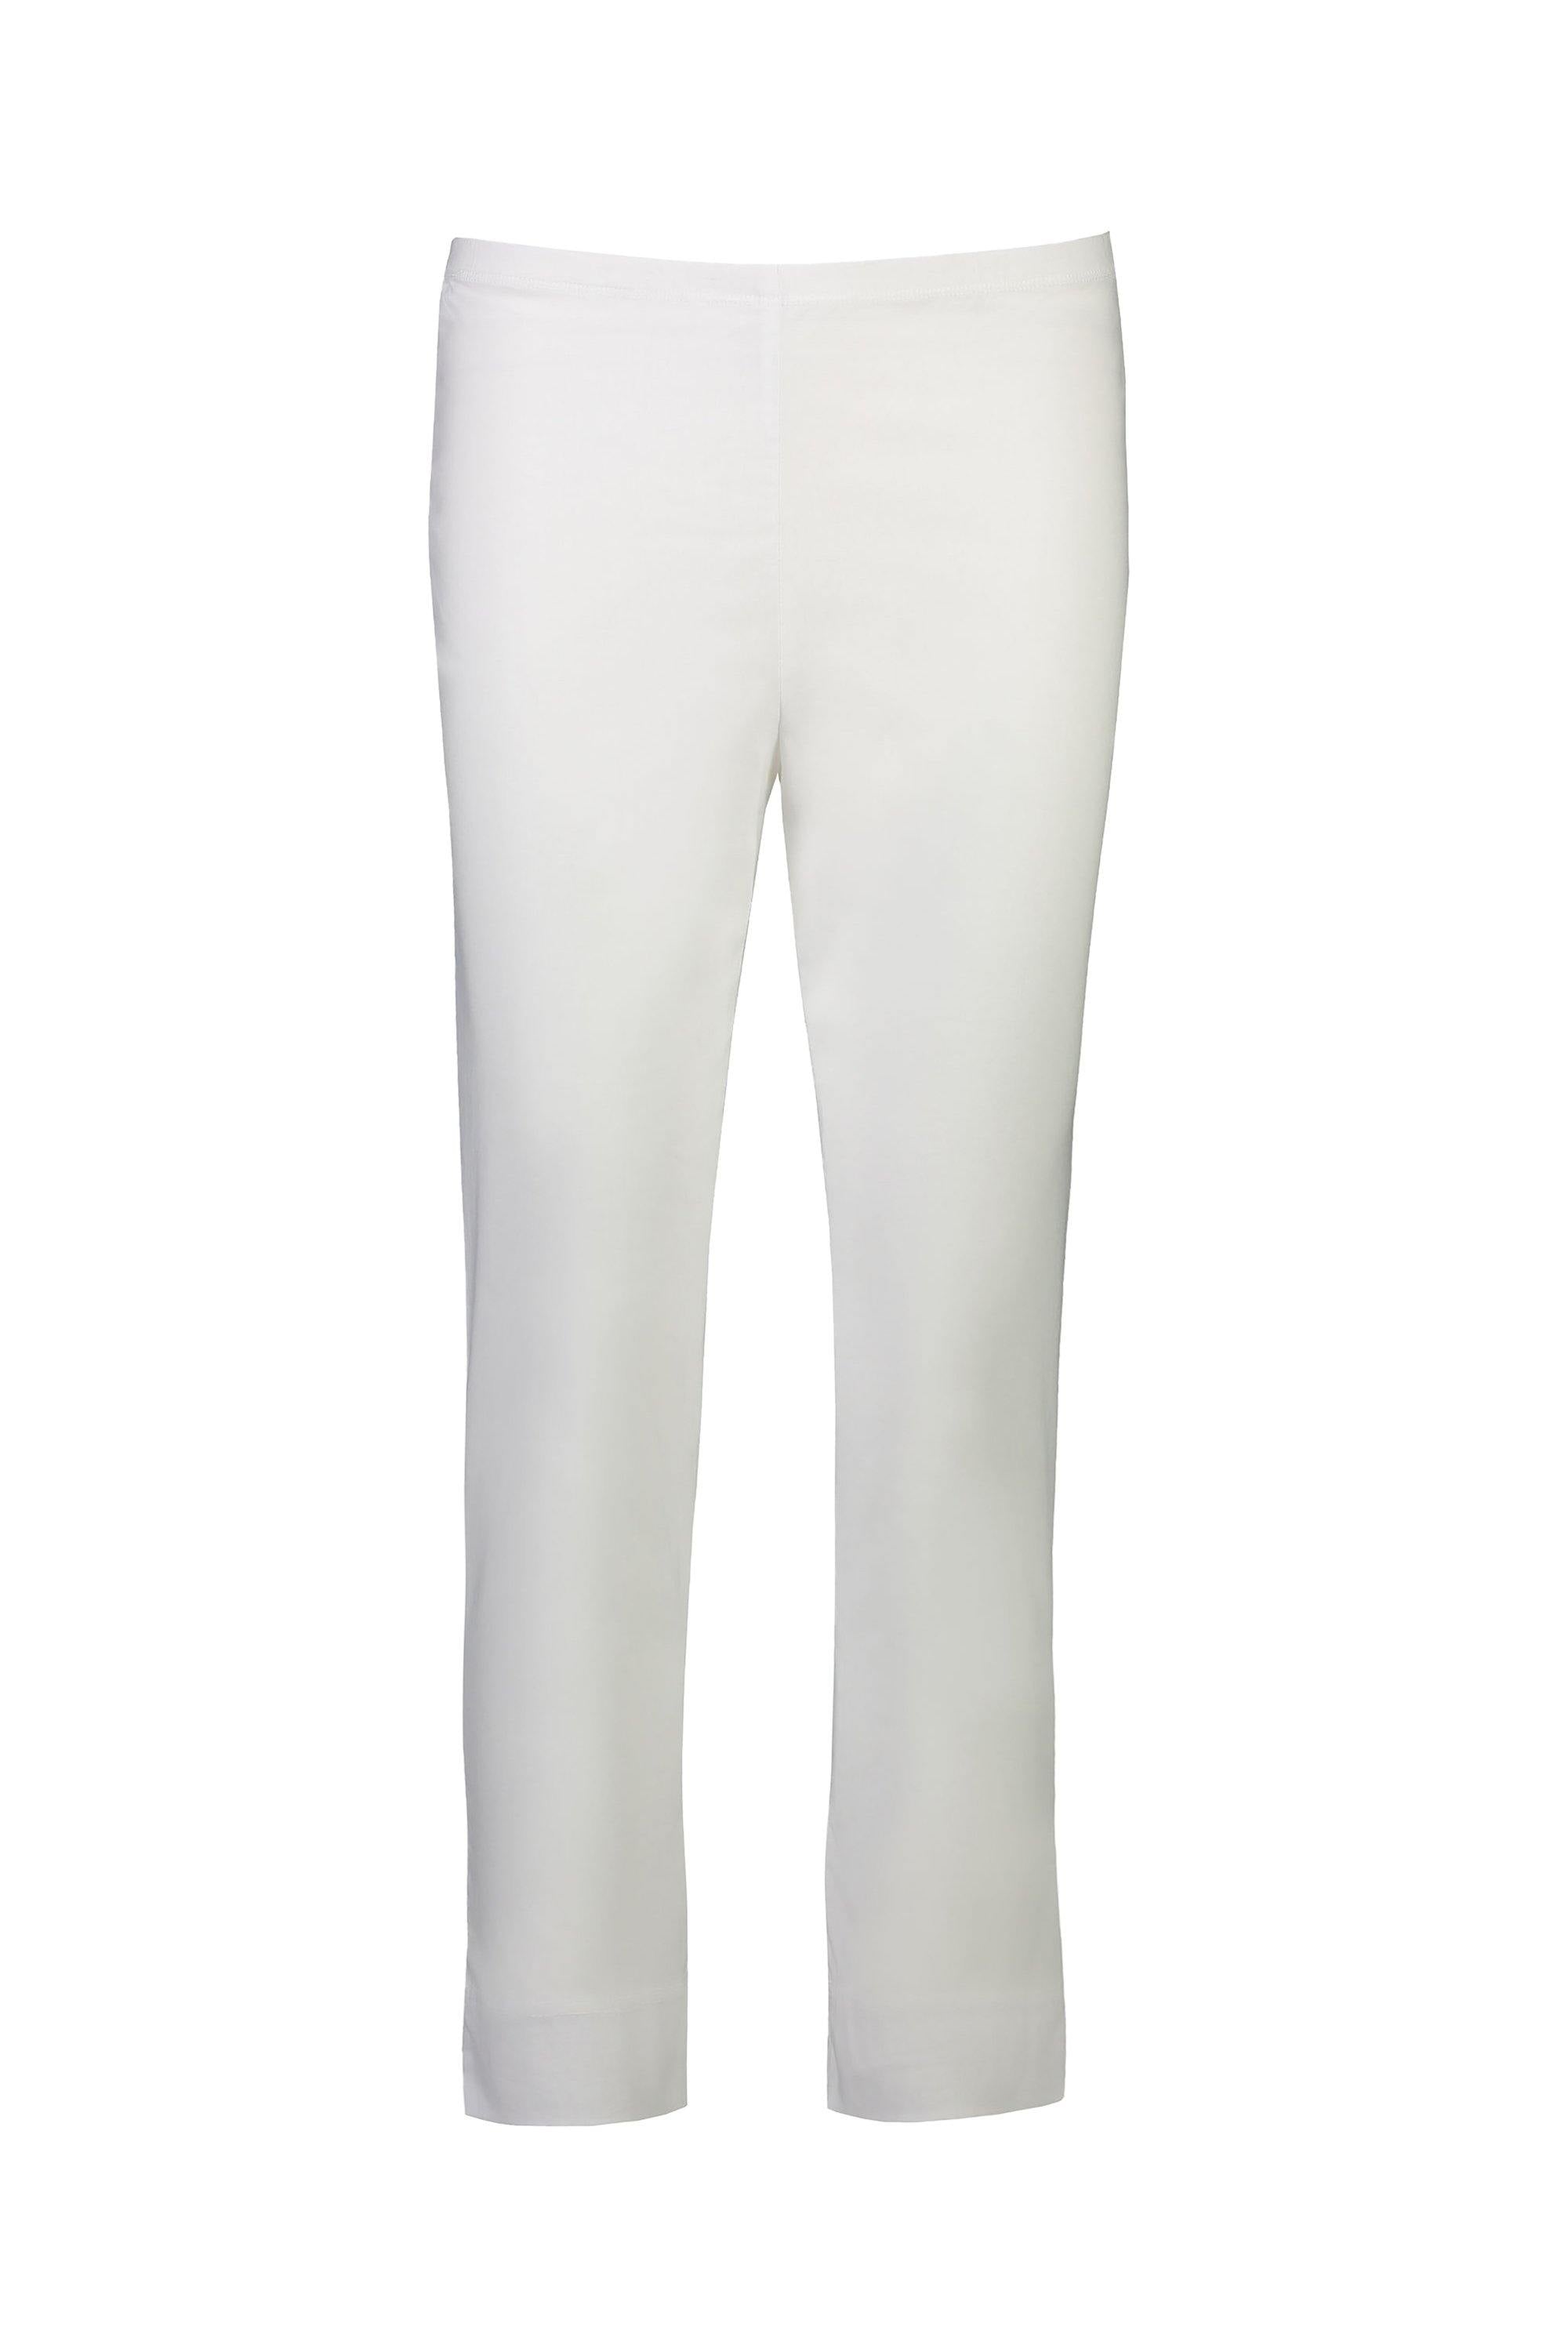 Acrobat Eclipse Pant - White - Pant VERGE